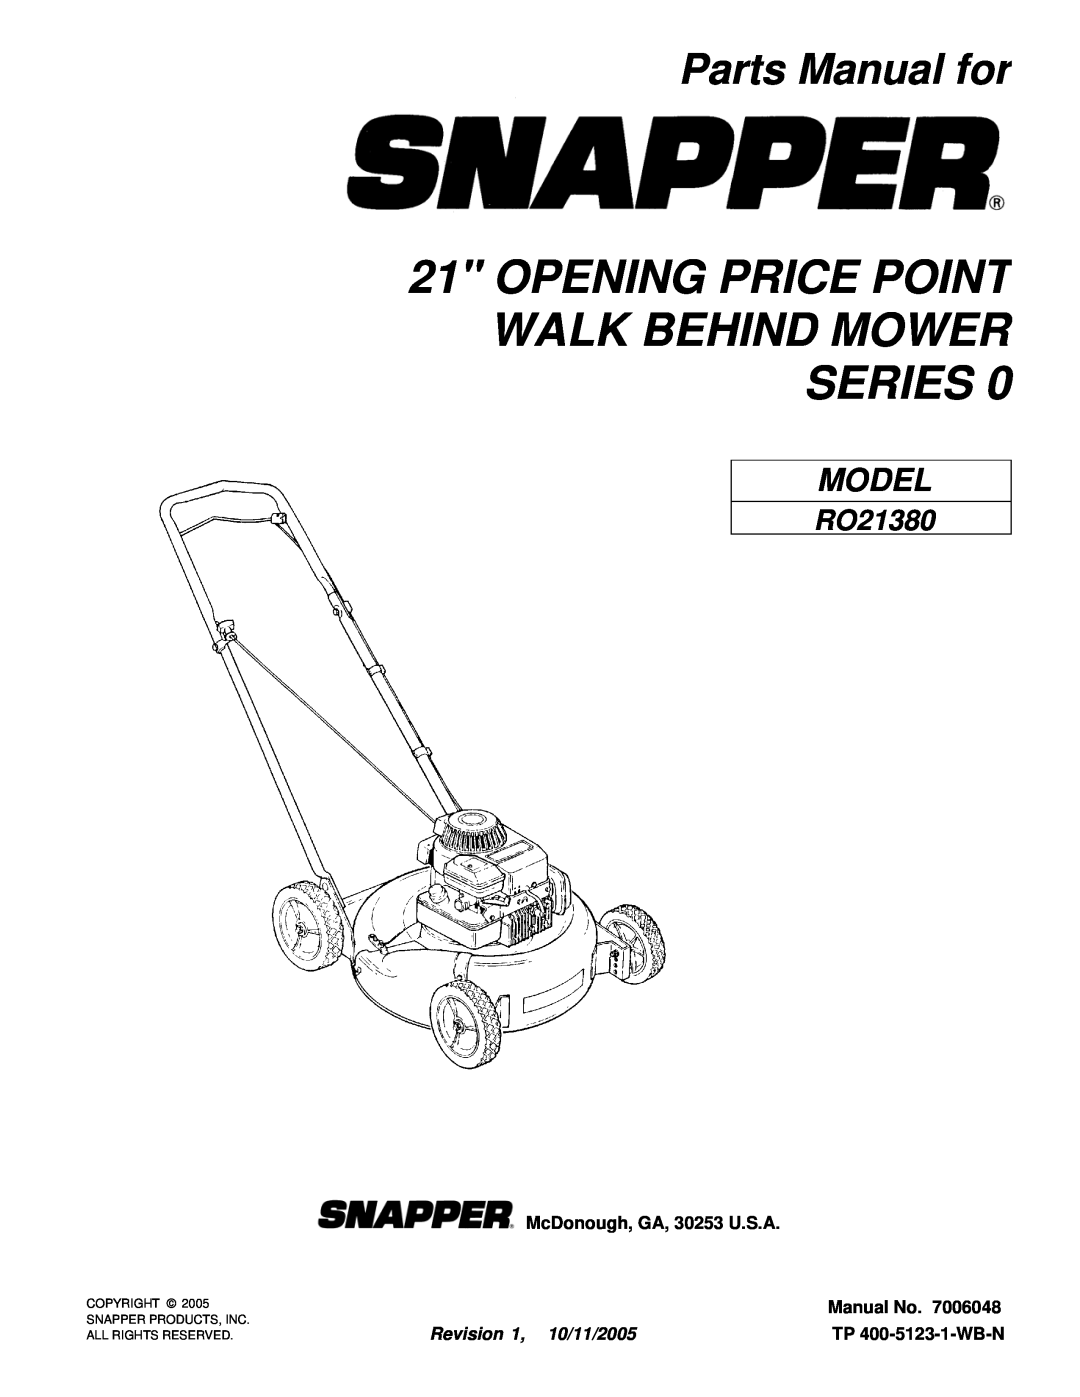 Snapper RO21380 manual Opening Price Point Walk Behind Mower Series, Parts Manual for, McDonough, GA, 30253 U.S.A, Model 